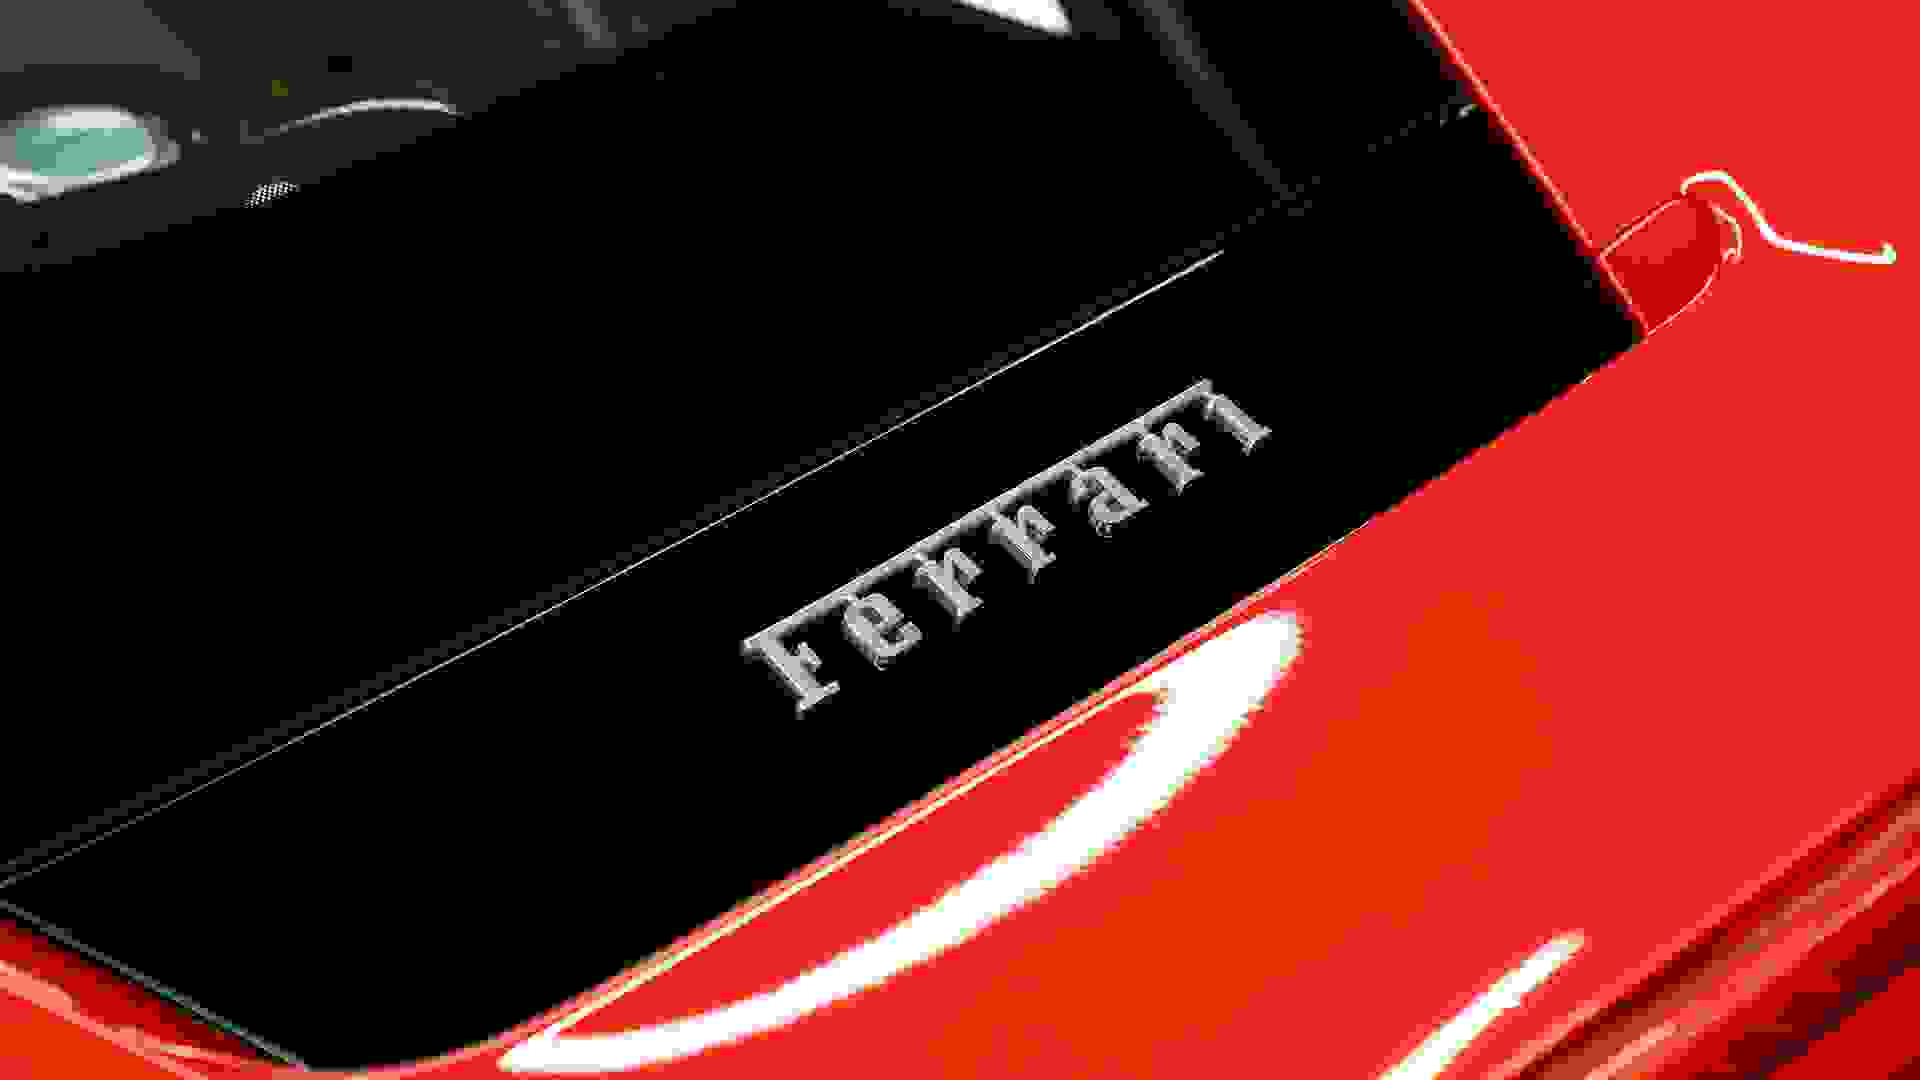 Ferrari 488 Photo 9f78e49b-e177-4b0c-90bc-f5880f7ebca0.jpg